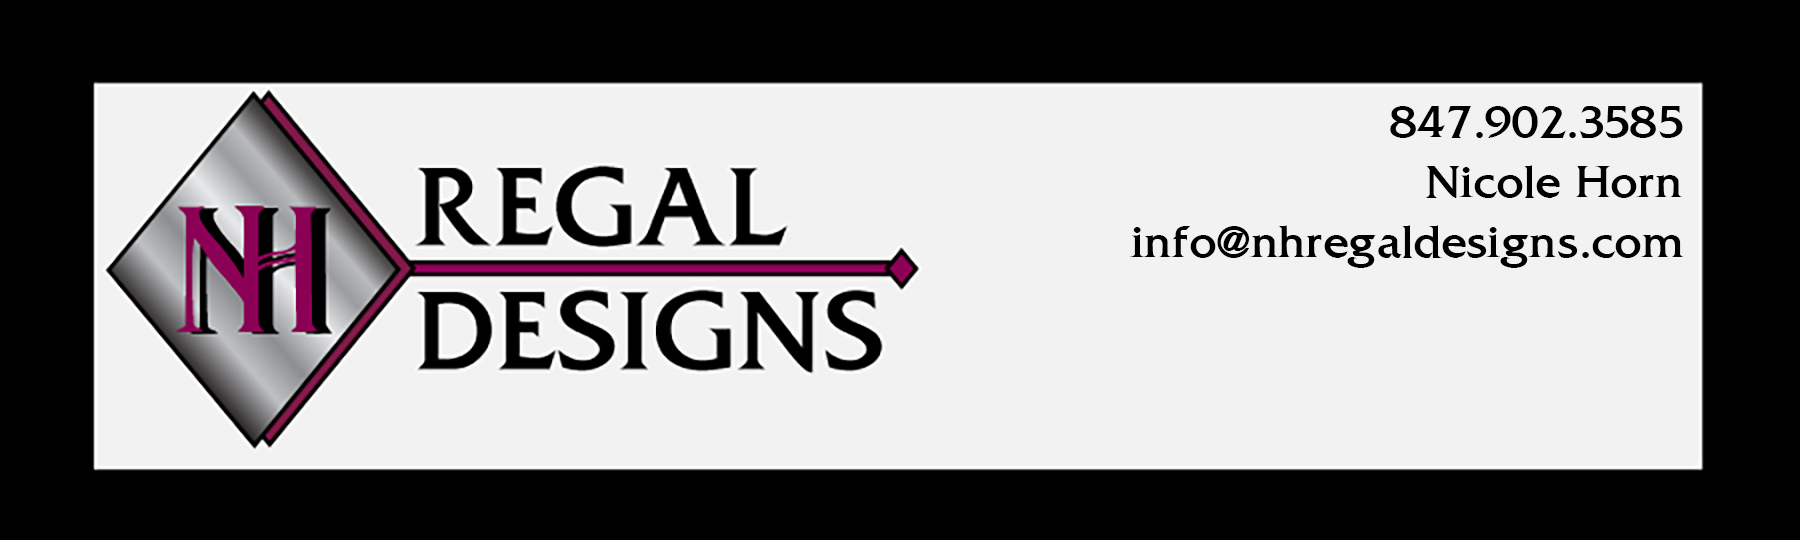 NH Regal Designs Logo 